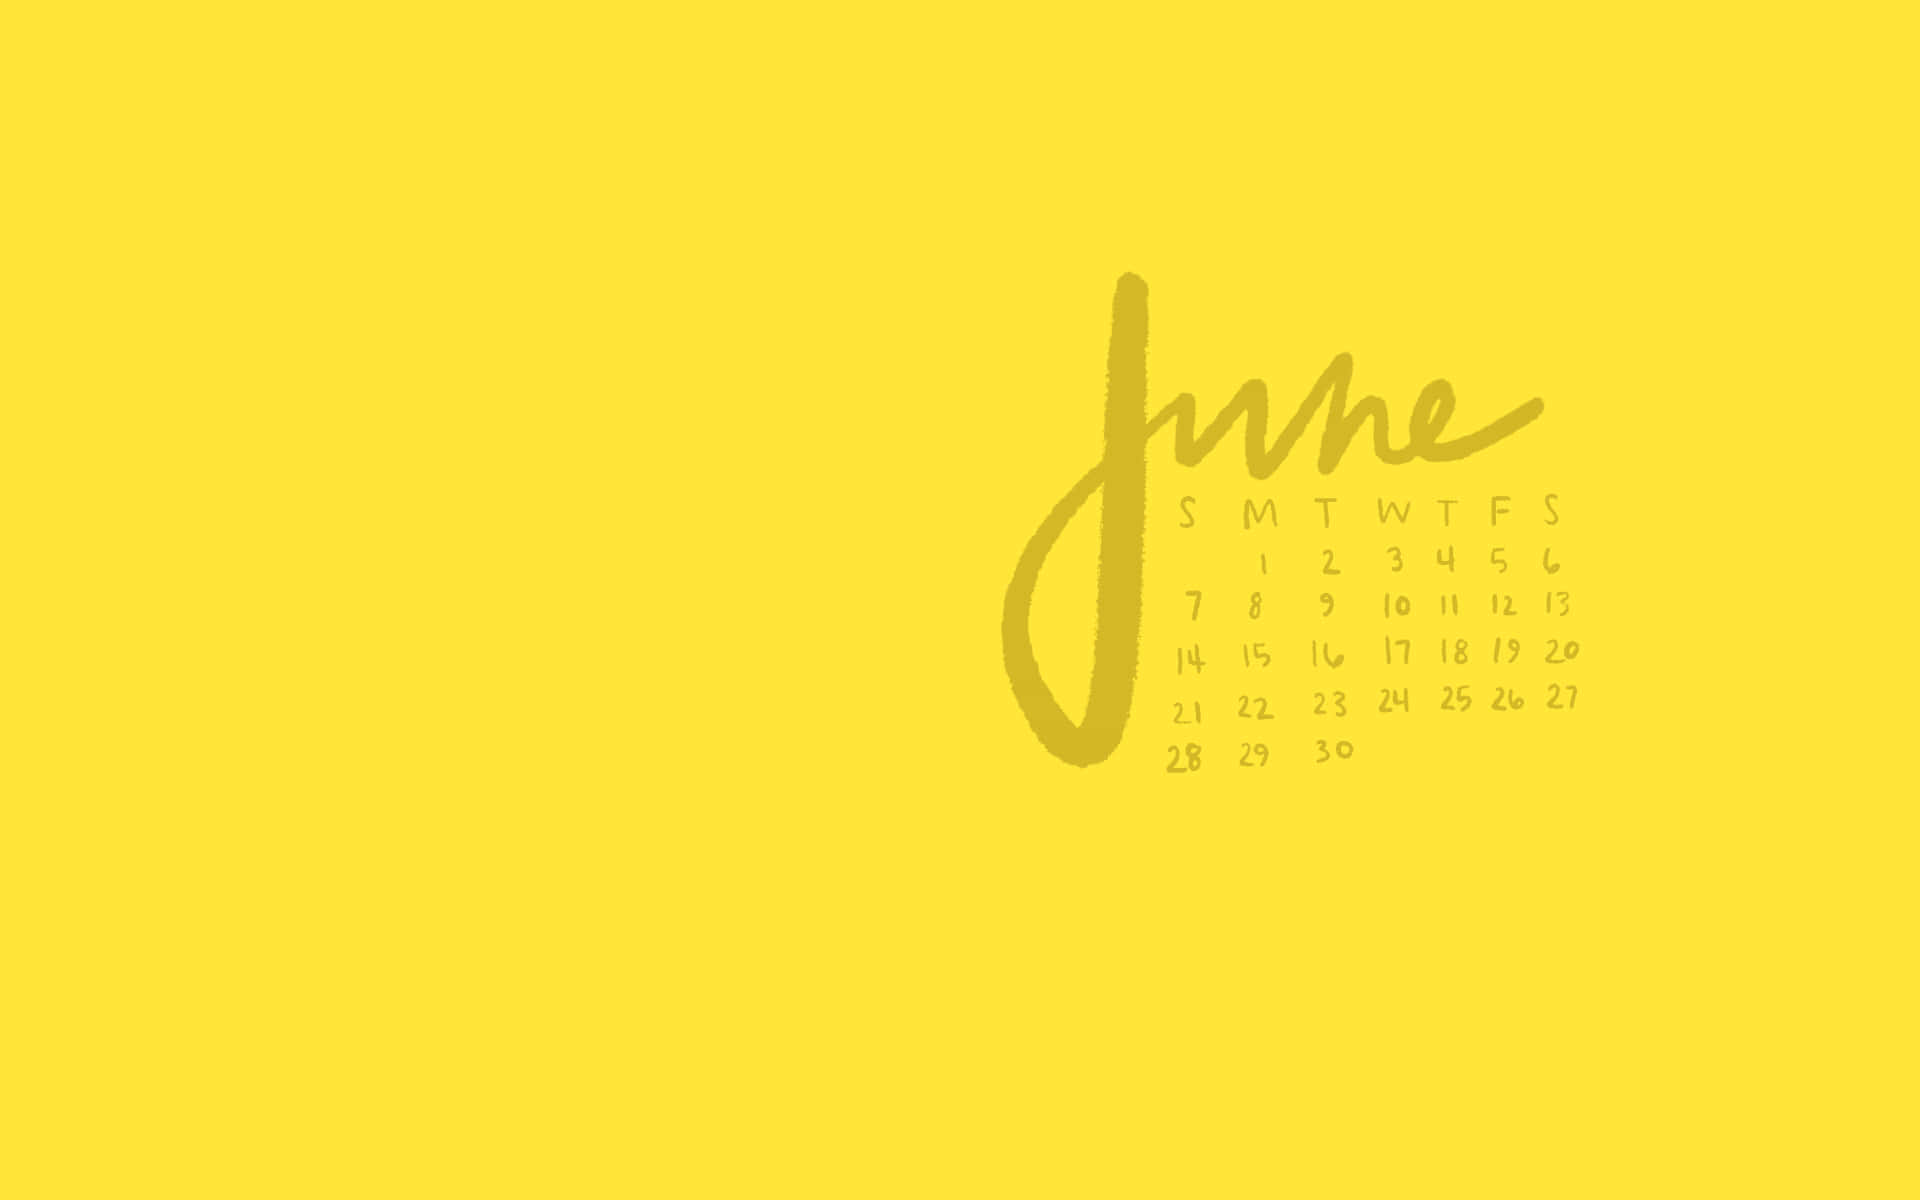 June Calendar Desktop Background Wallpaper